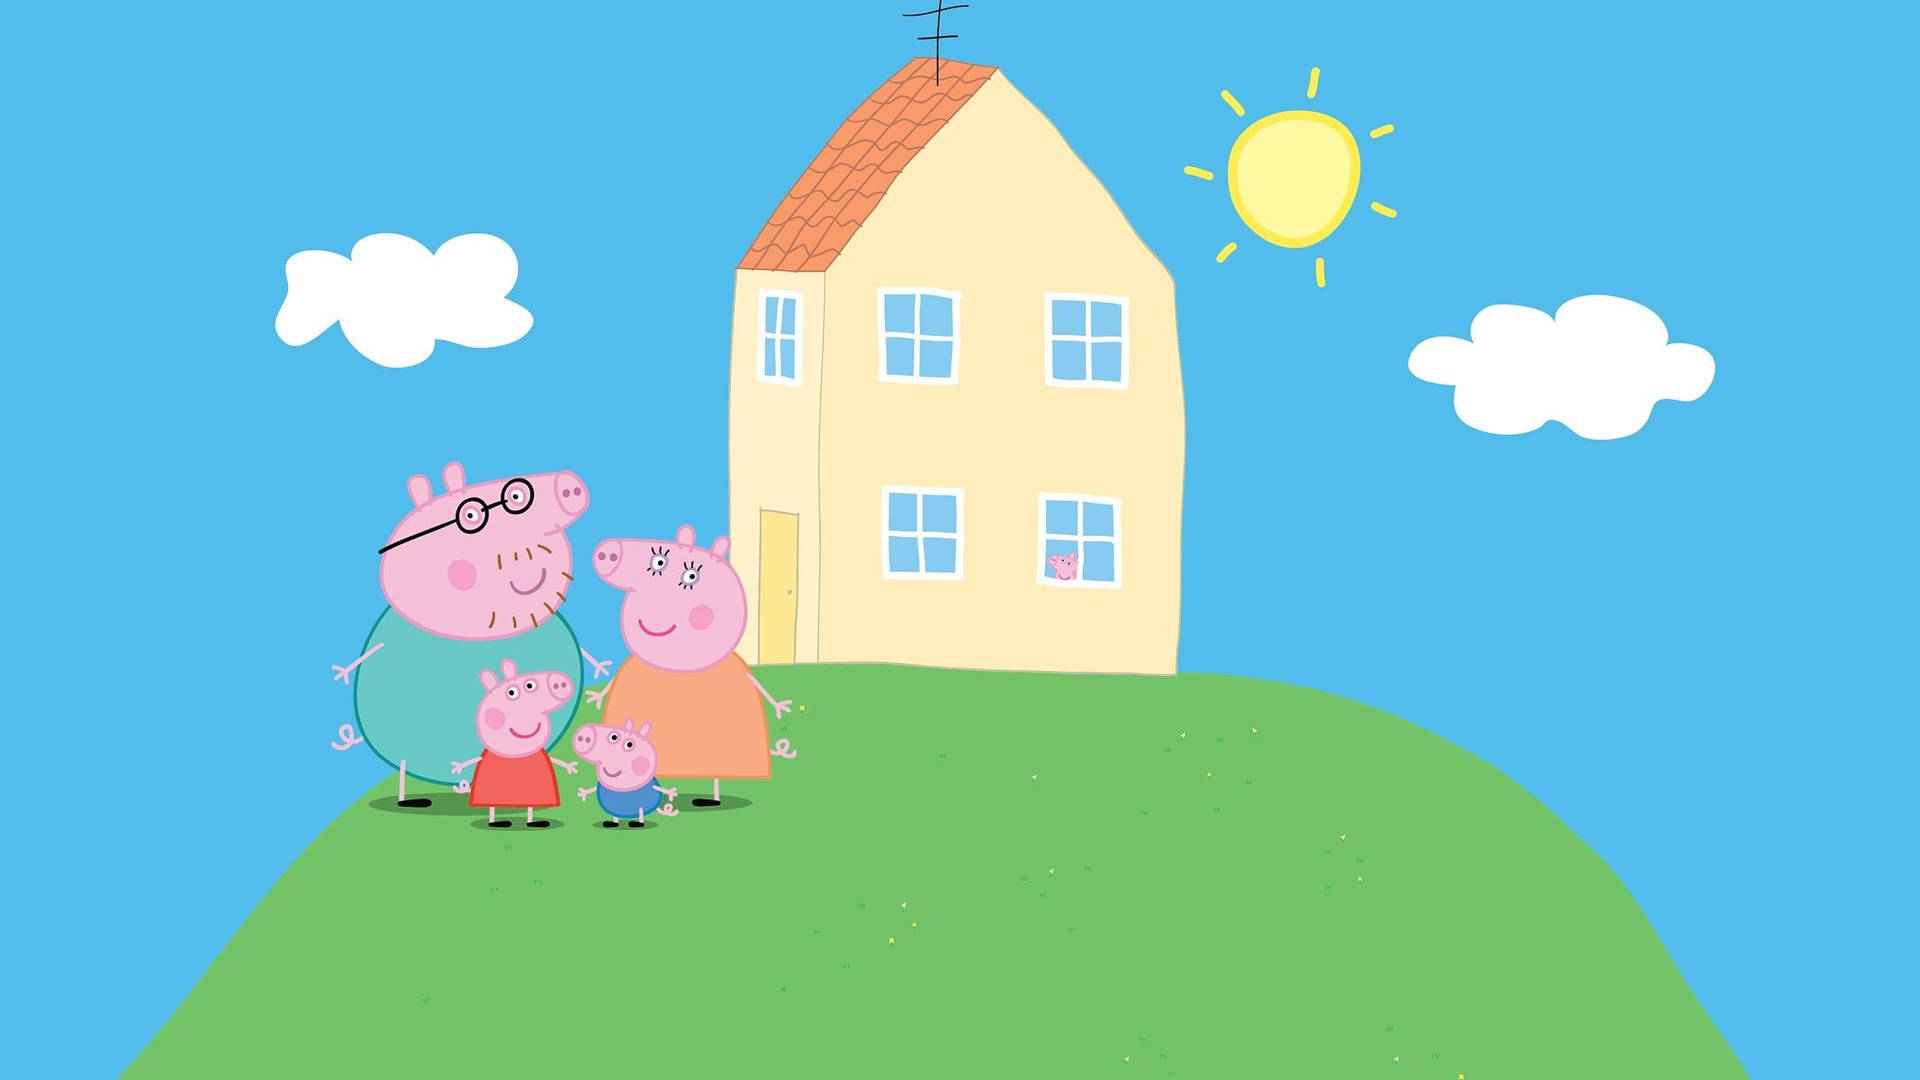 Peppa Pig Home Cartoon Network Characters Background